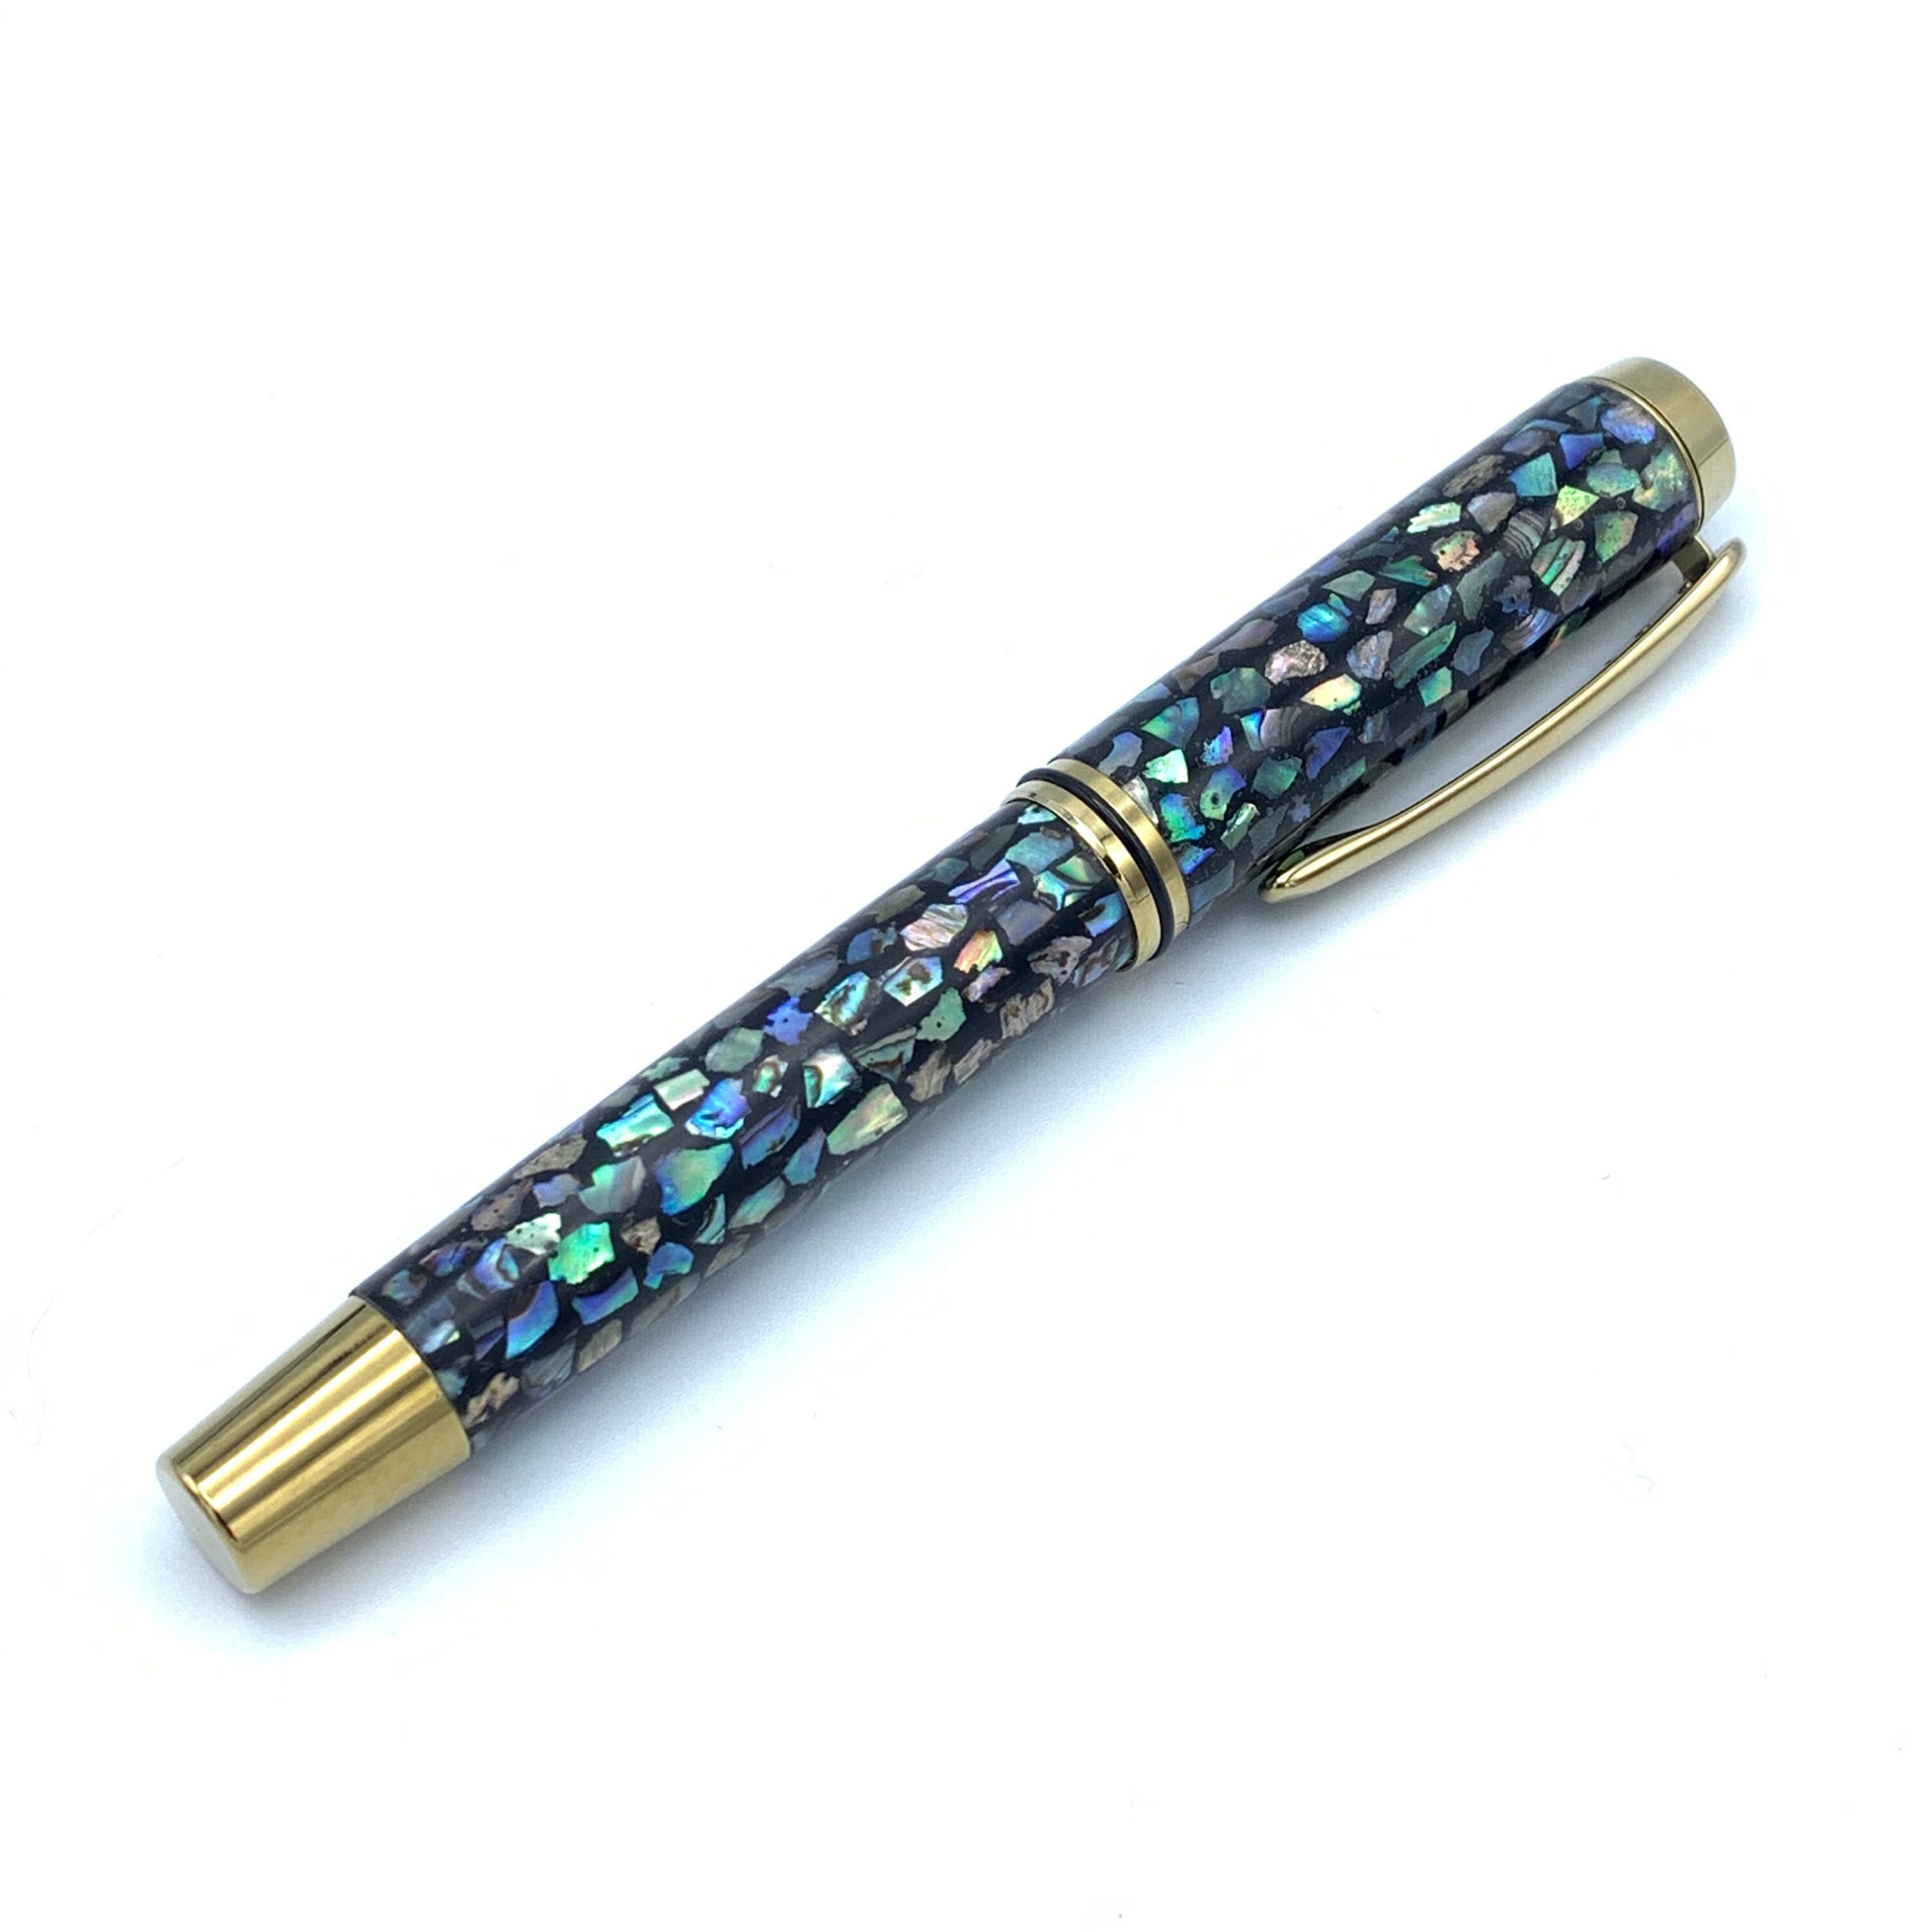 Pitchman Closer Teal Rollerball Pen - Pens For Men - Nice Pen